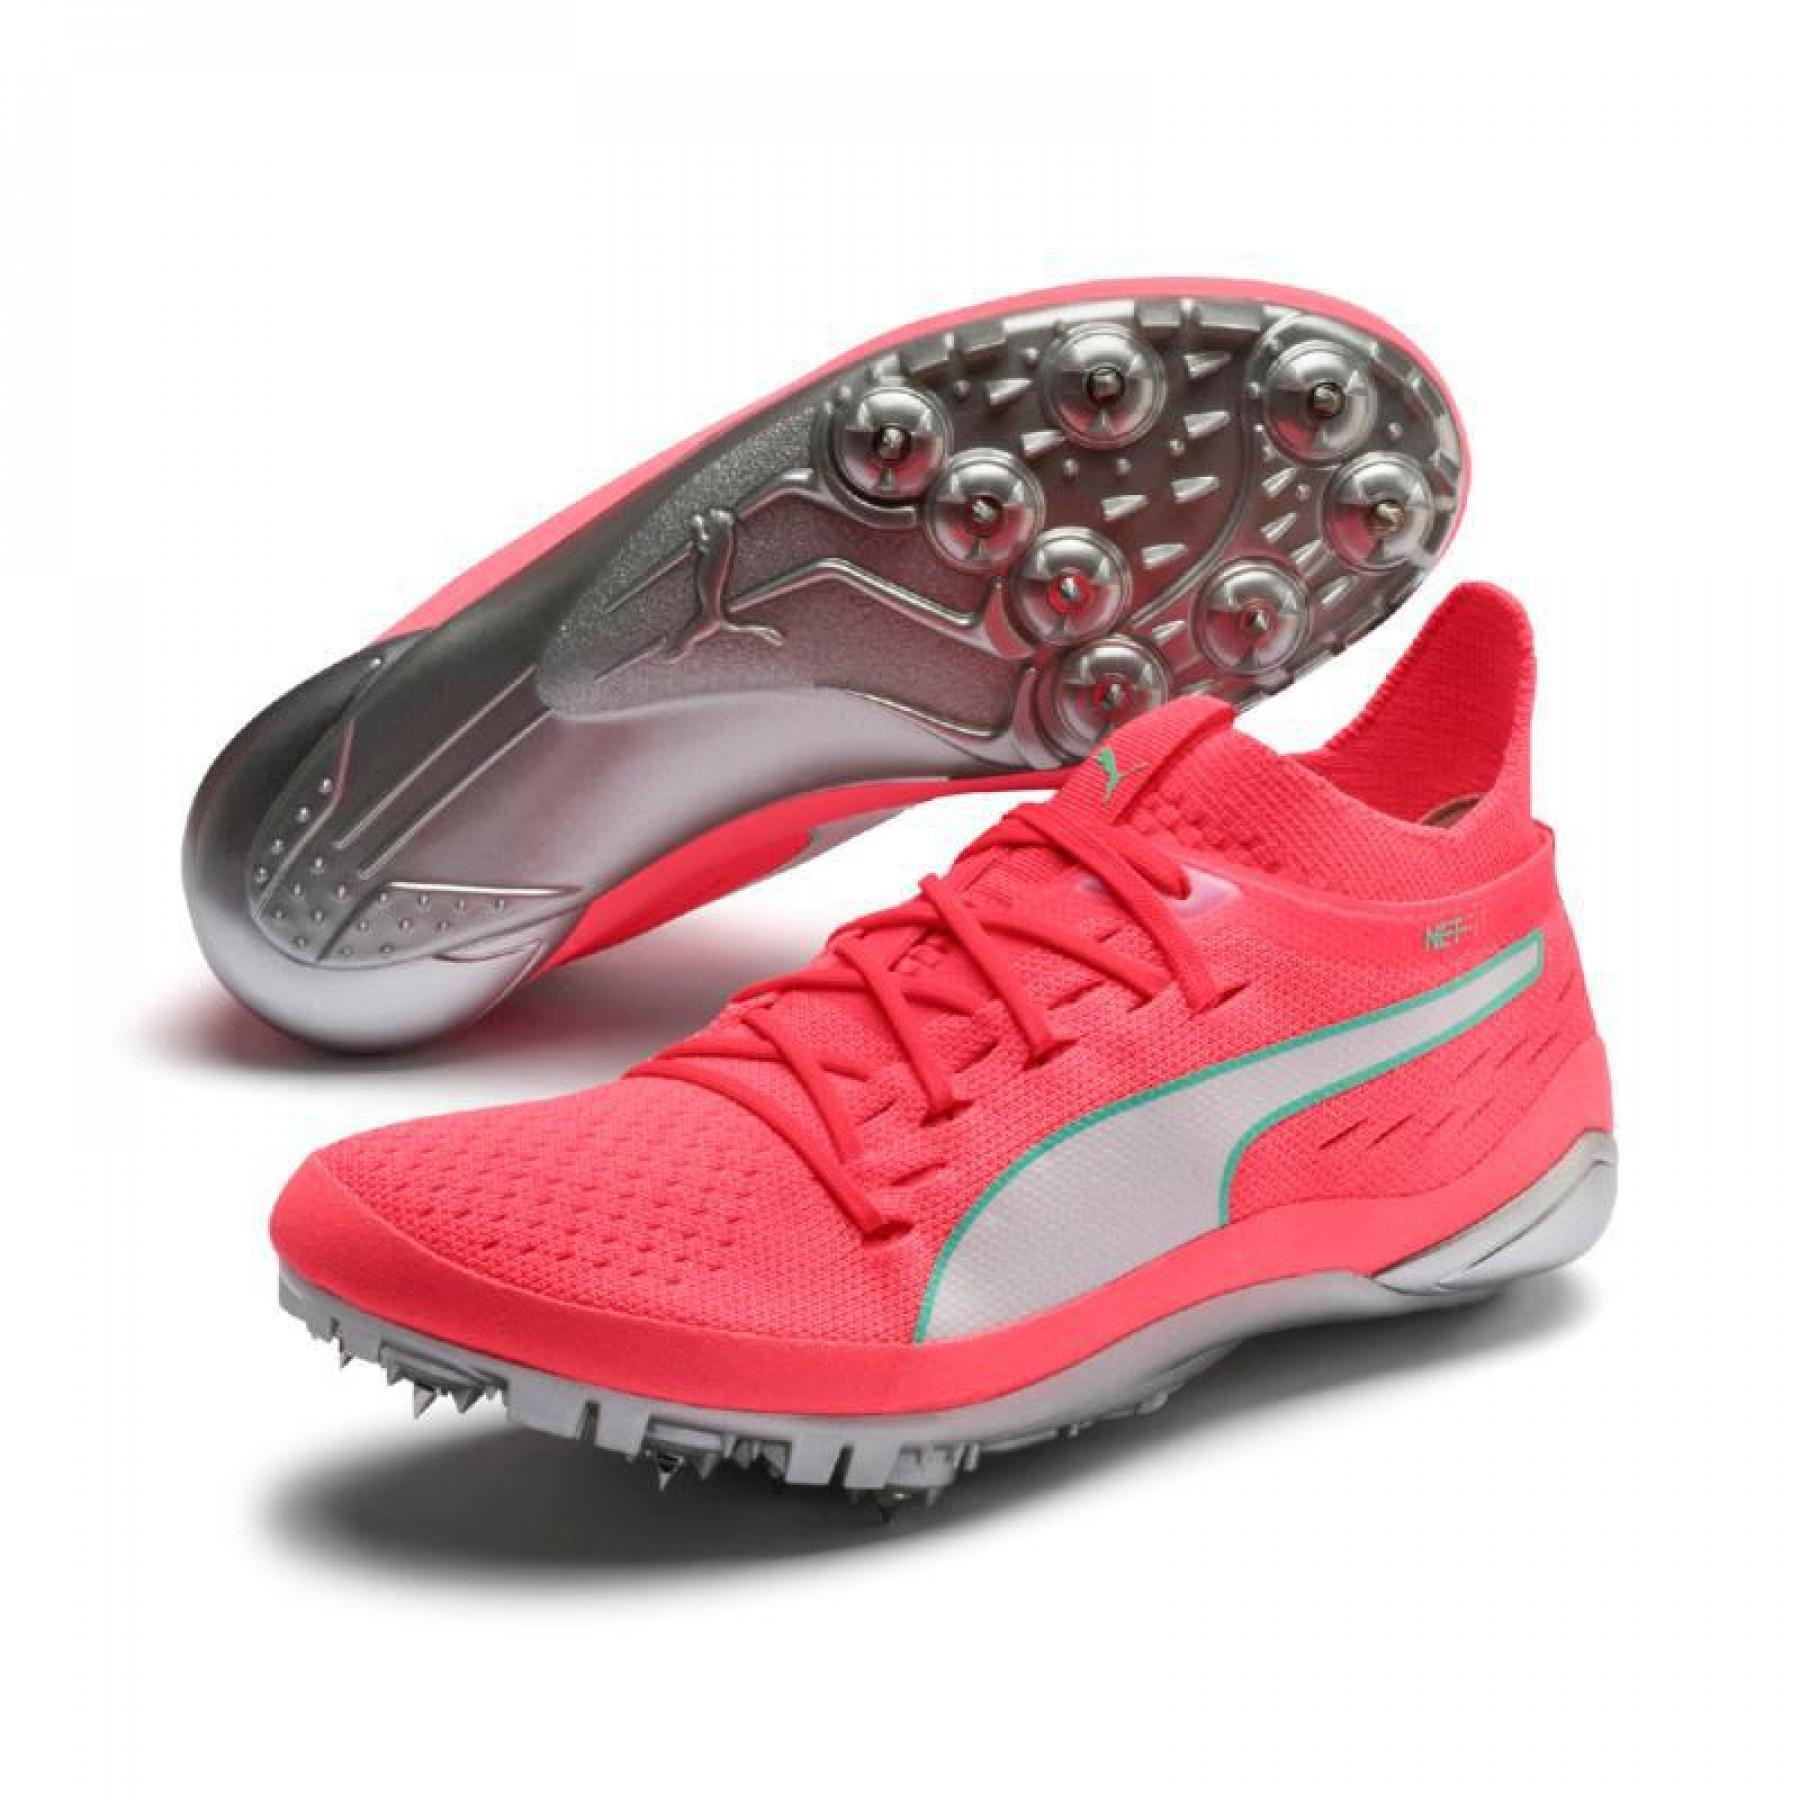 Chaussures de running Puma Evospeed netfit spr